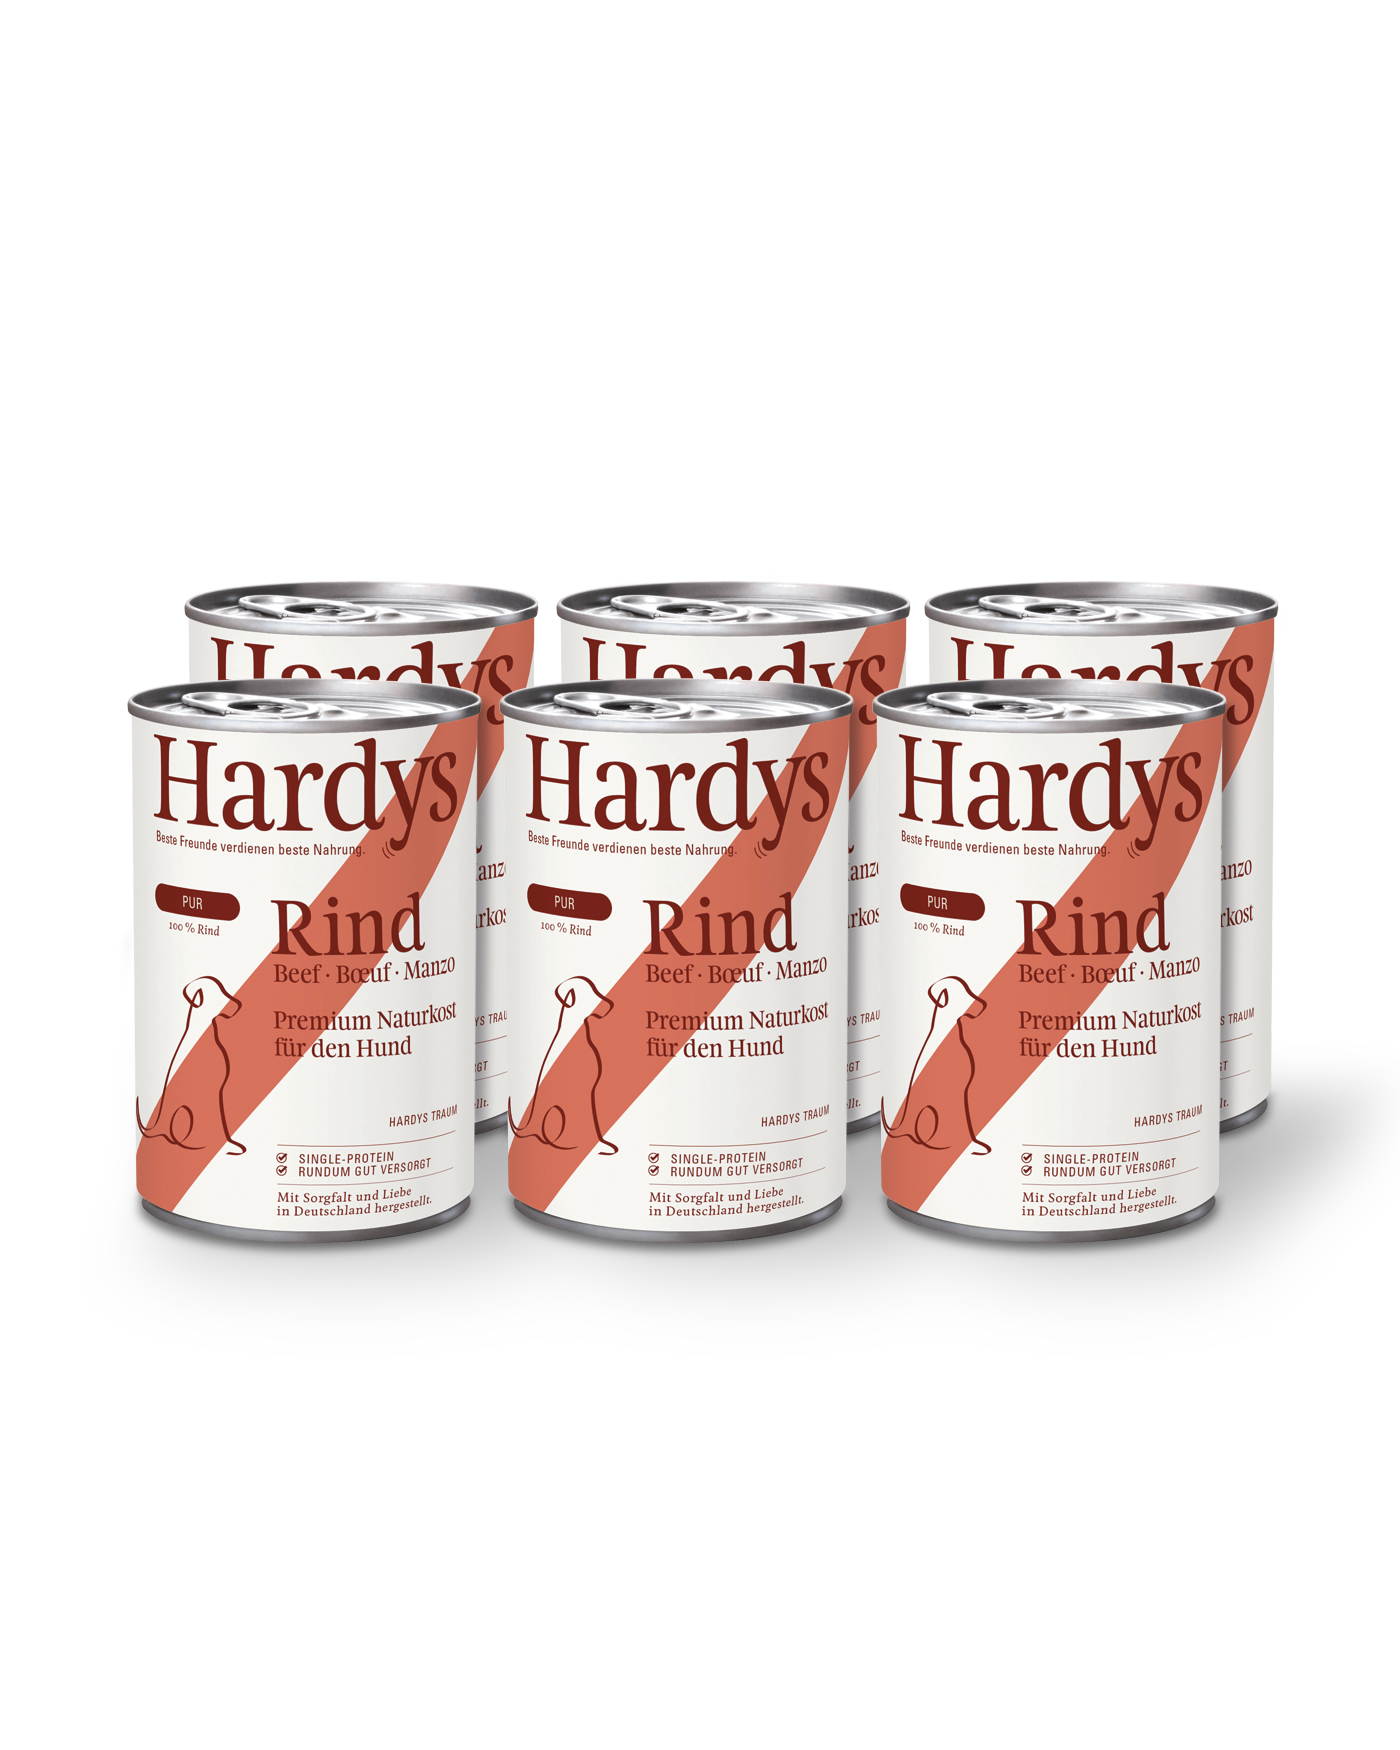 Hardys Pur Rind, 6 x 400 g